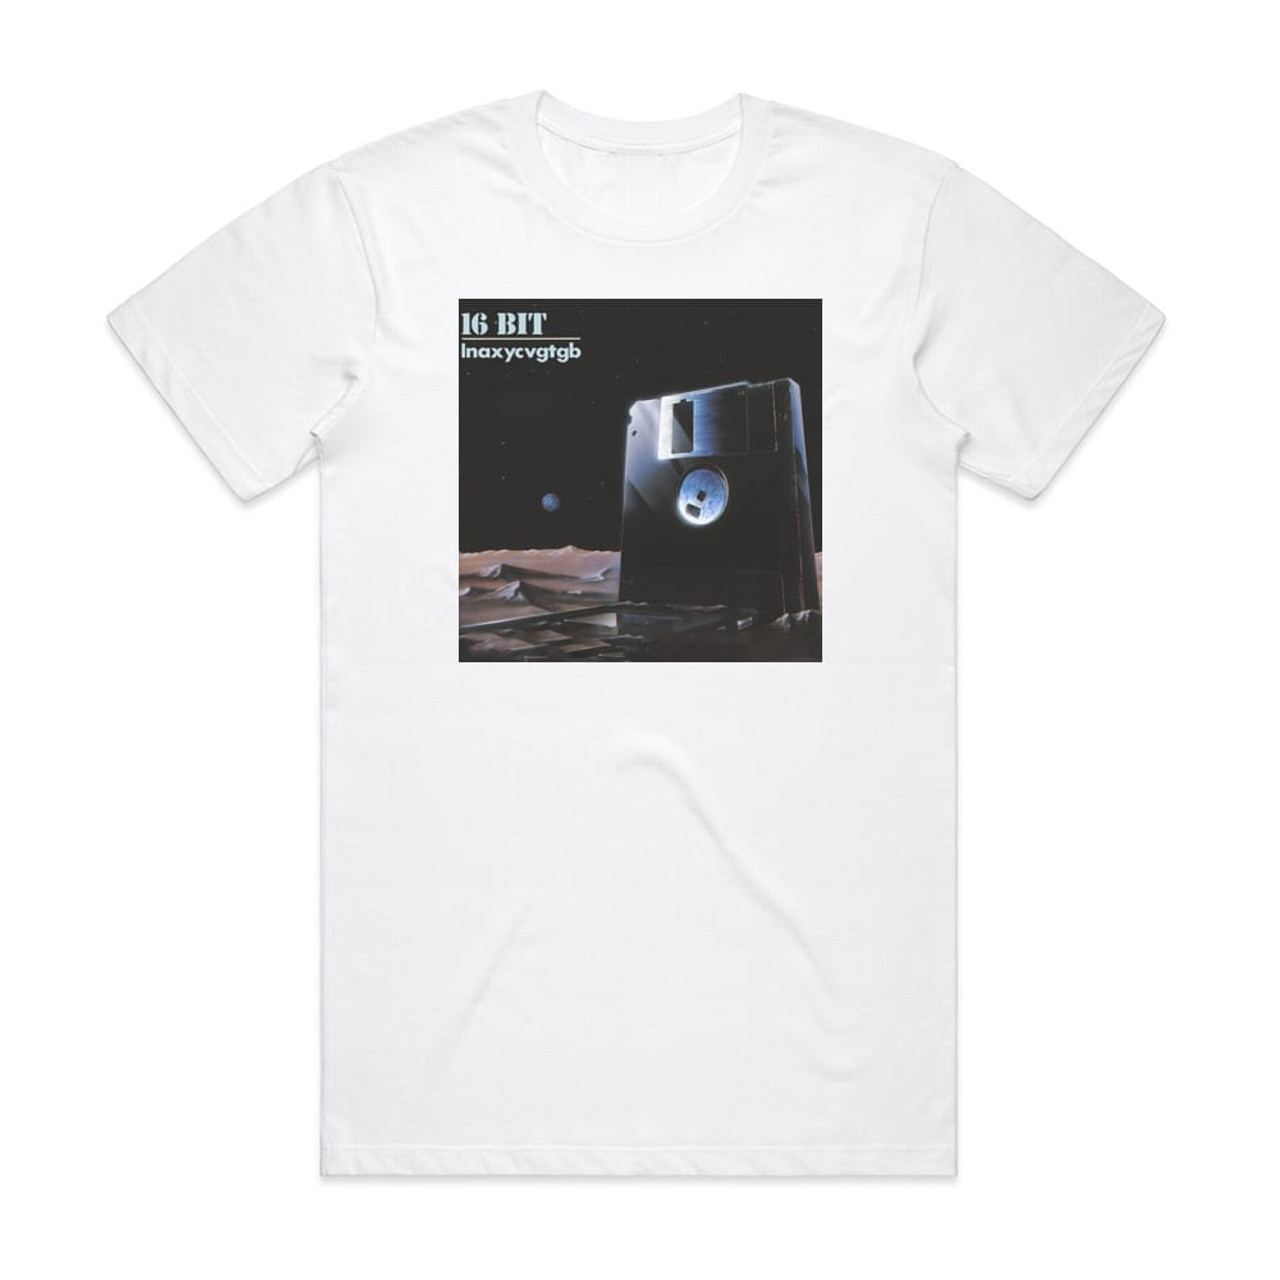 16 Bit Inaxycvgtgb Album Cover T-Shirt White